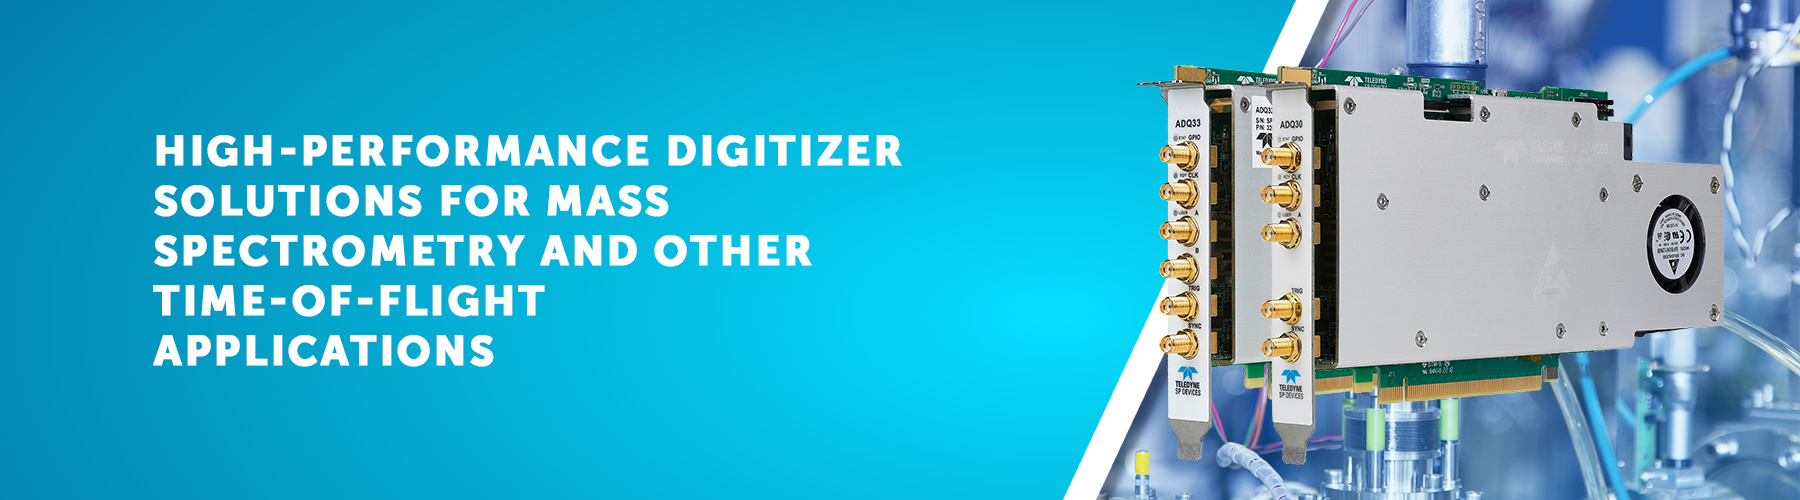 High-Performance Digitizer Solutions Banner